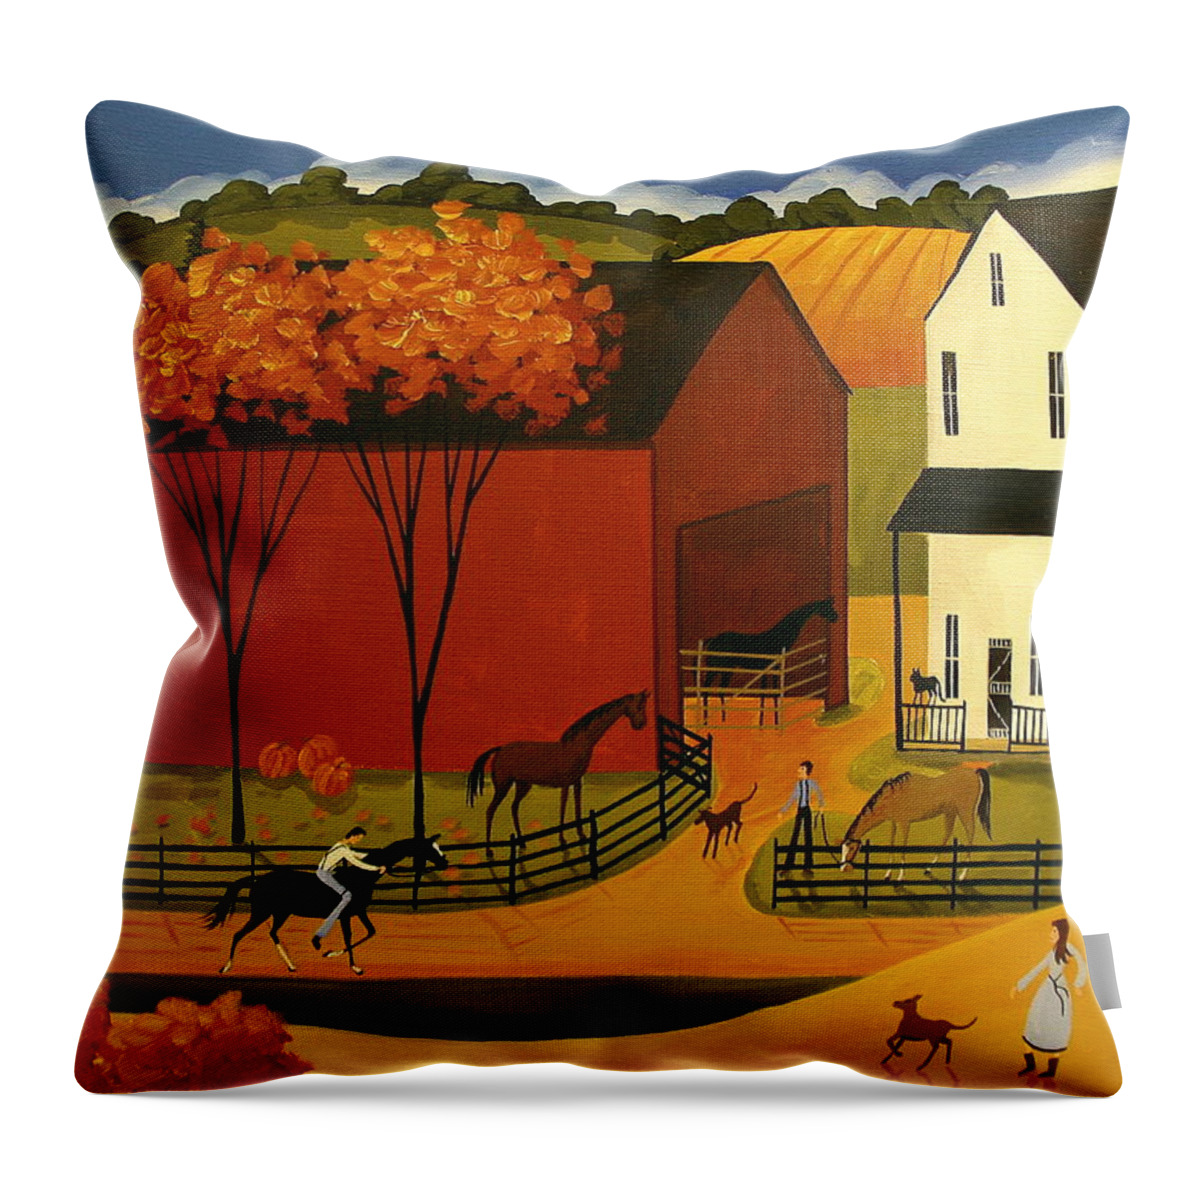 Folk Art Throw Pillow featuring the painting Sloppy Joe- folk art by Debbie Criswell